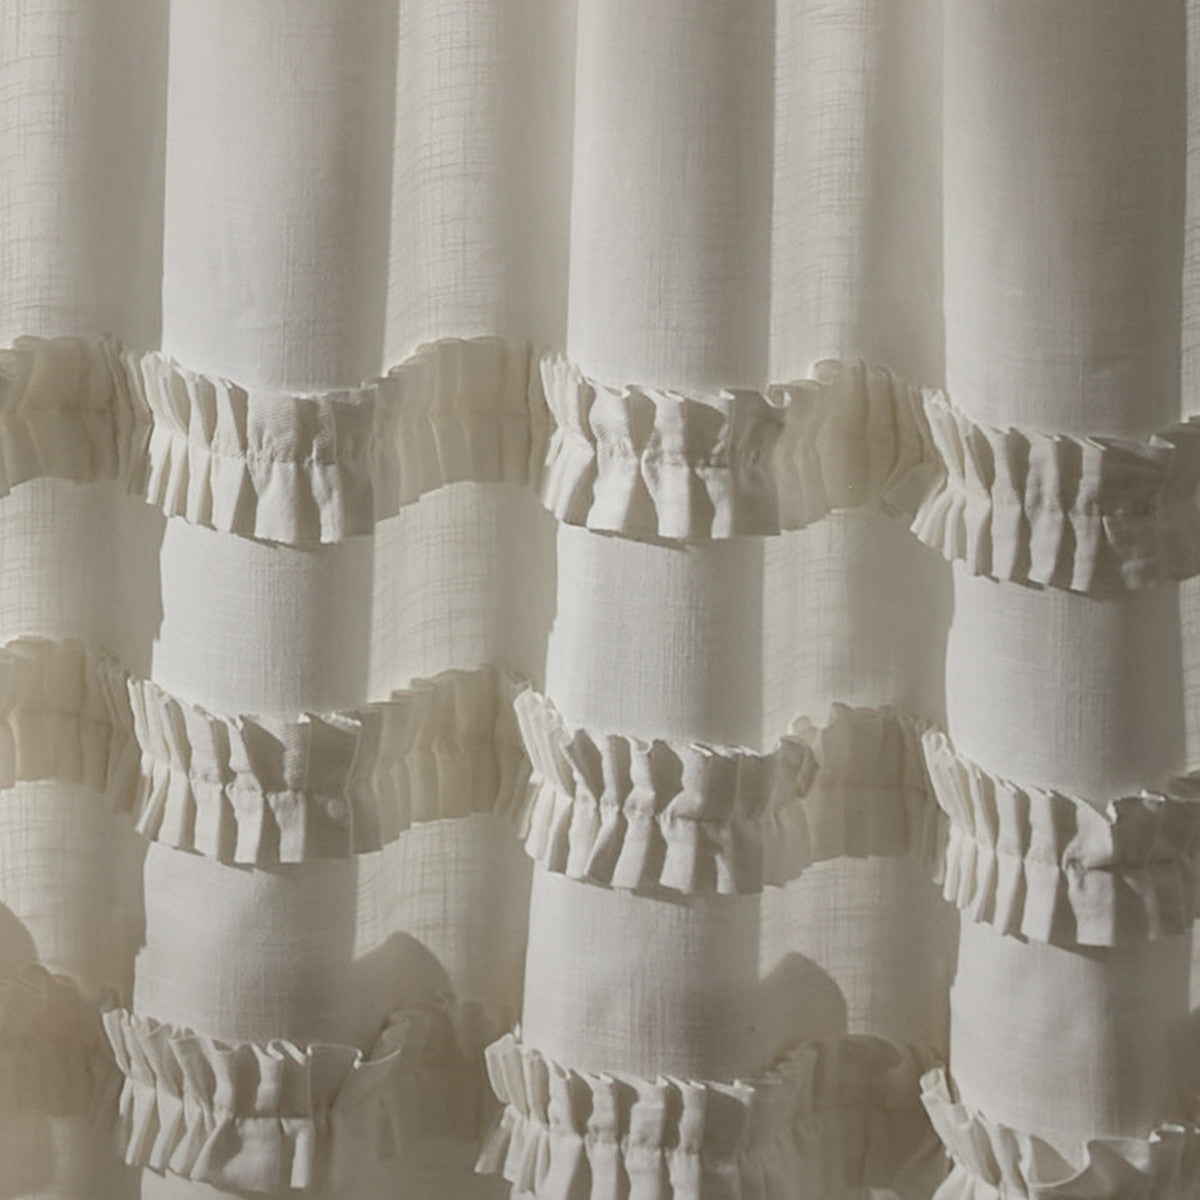 Colette Ruffle Shower Curtain - Set of 2 Park Designs